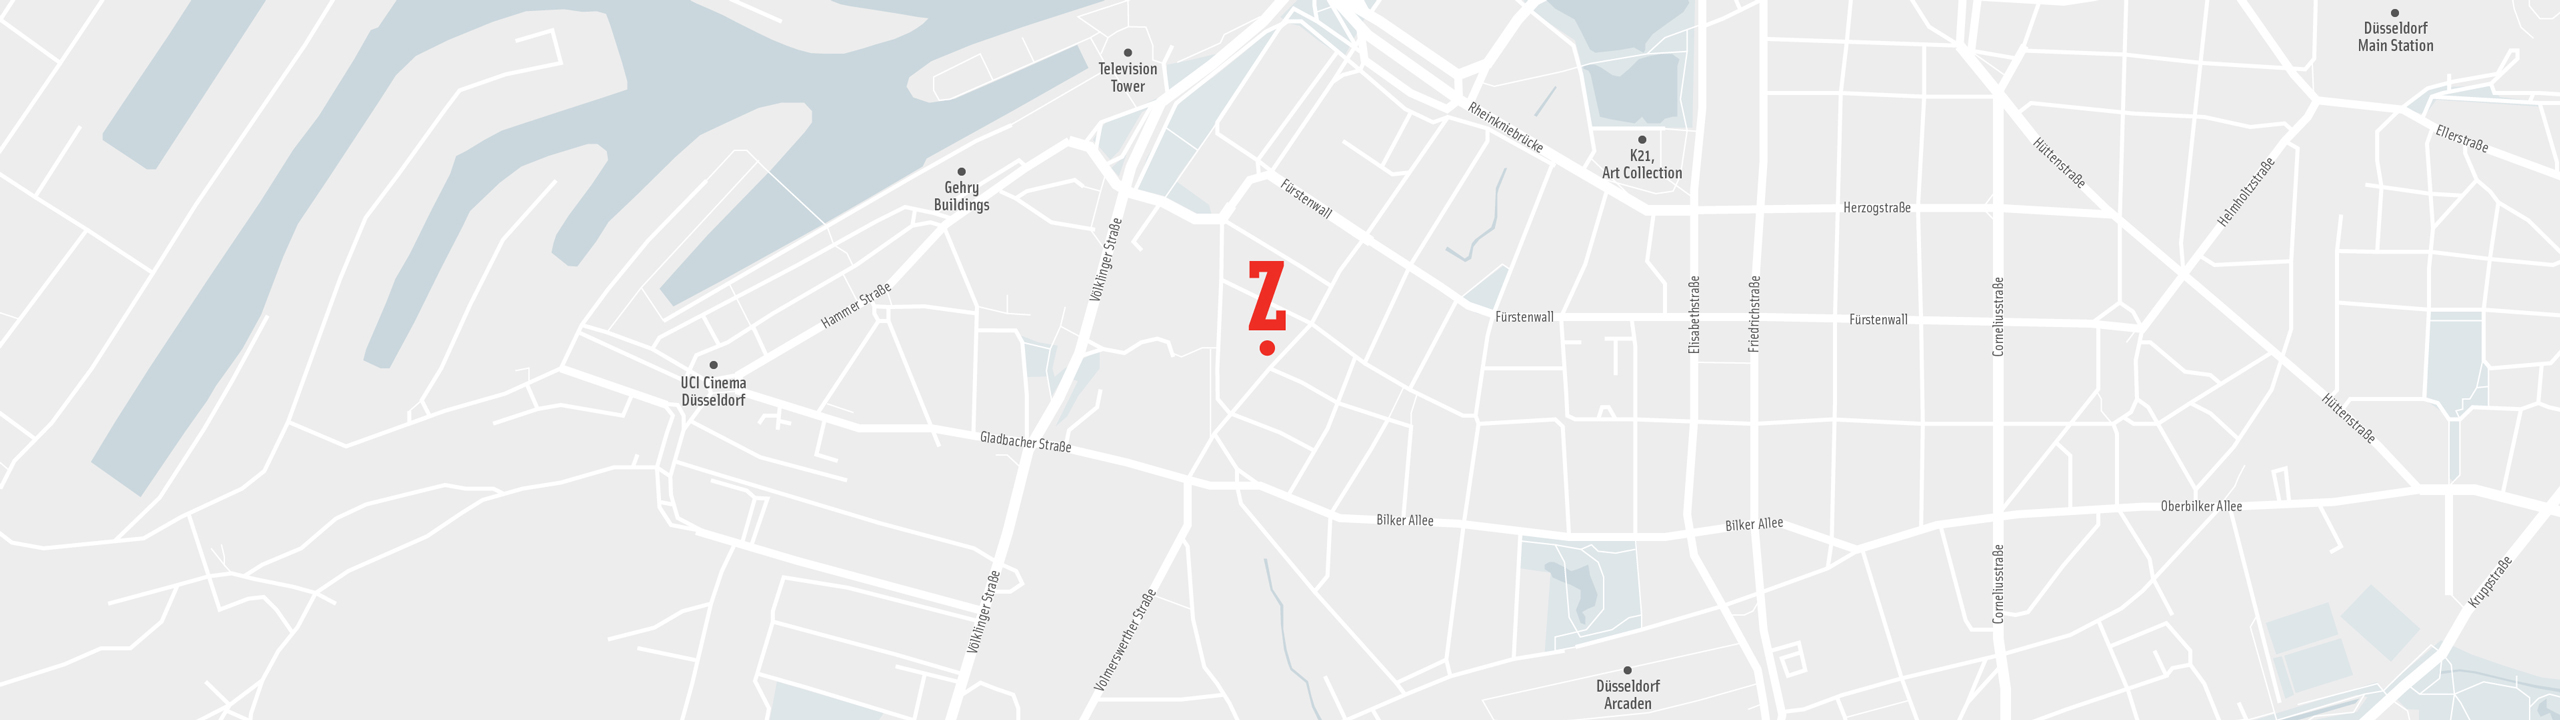 zora-design-agency-duesseldorf-contact-map2